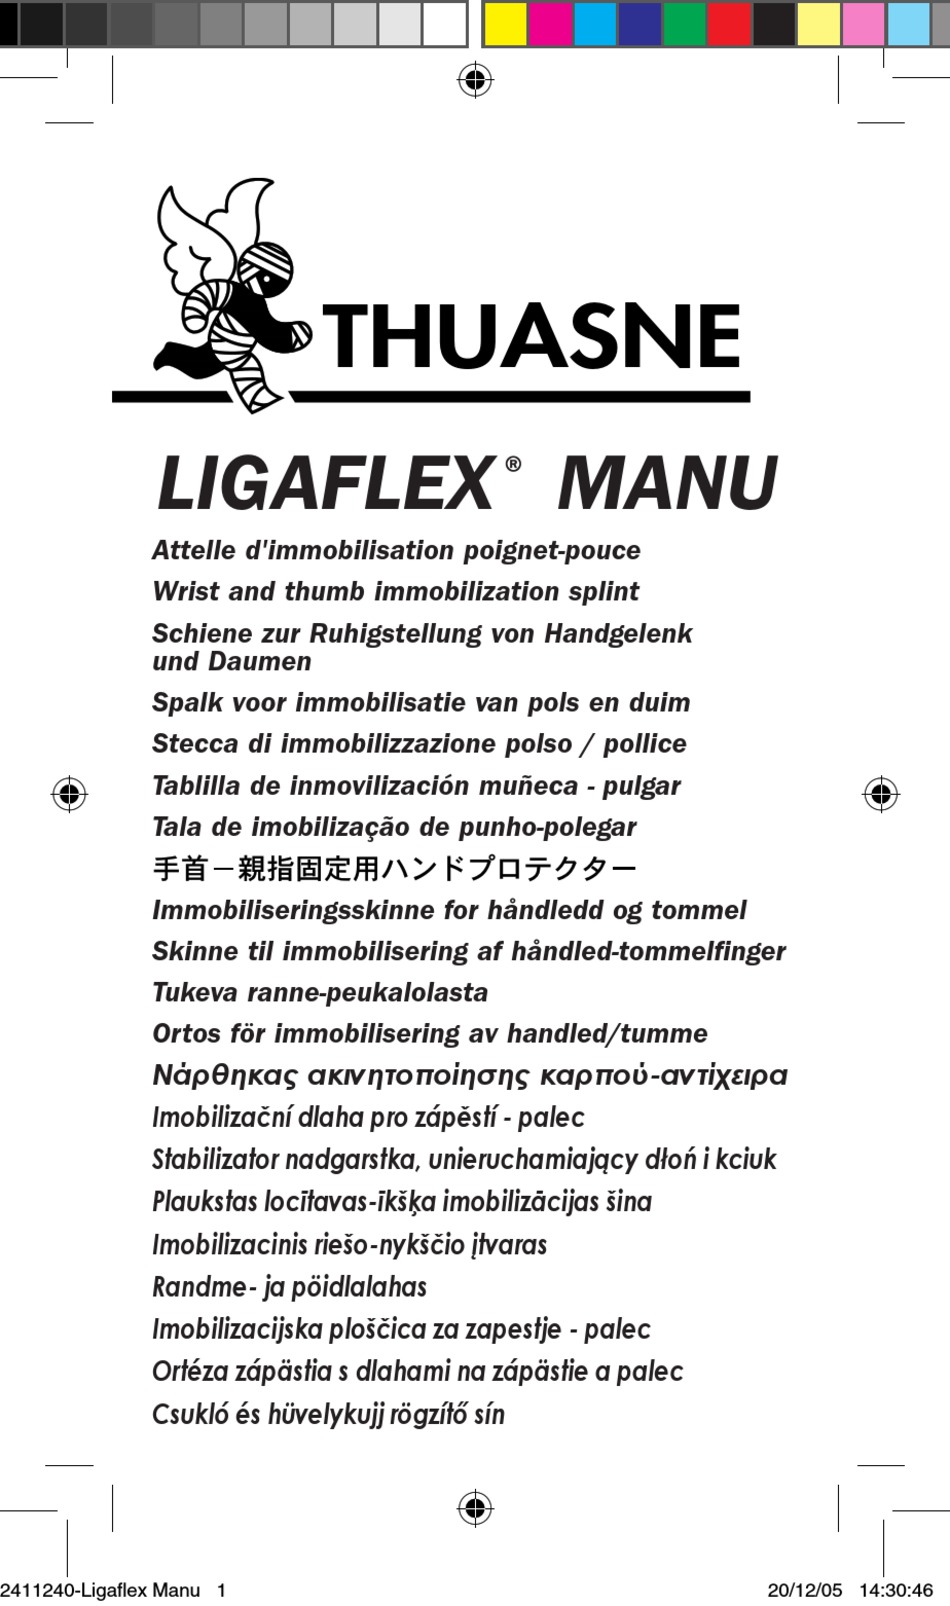 kraai smaak Struikelen THUASNE LIGAFLEX MANU MANUAL Pdf Download | ManualsLib